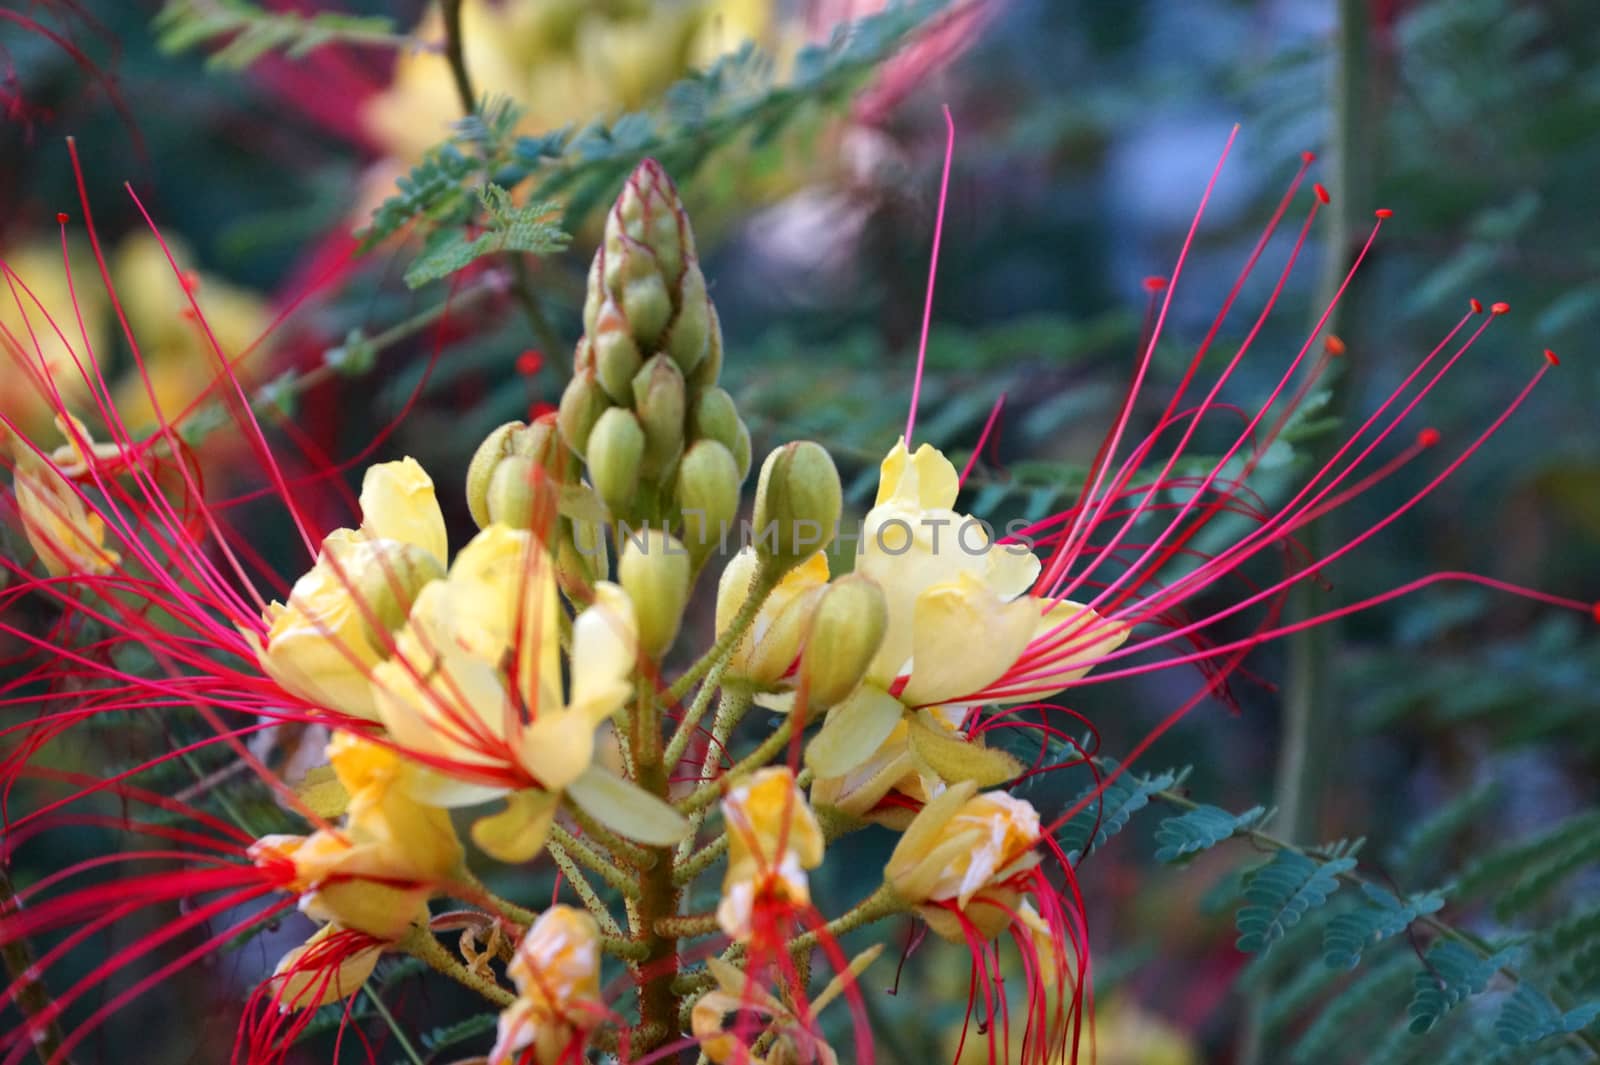 blooming acacia in summer close up by Annado